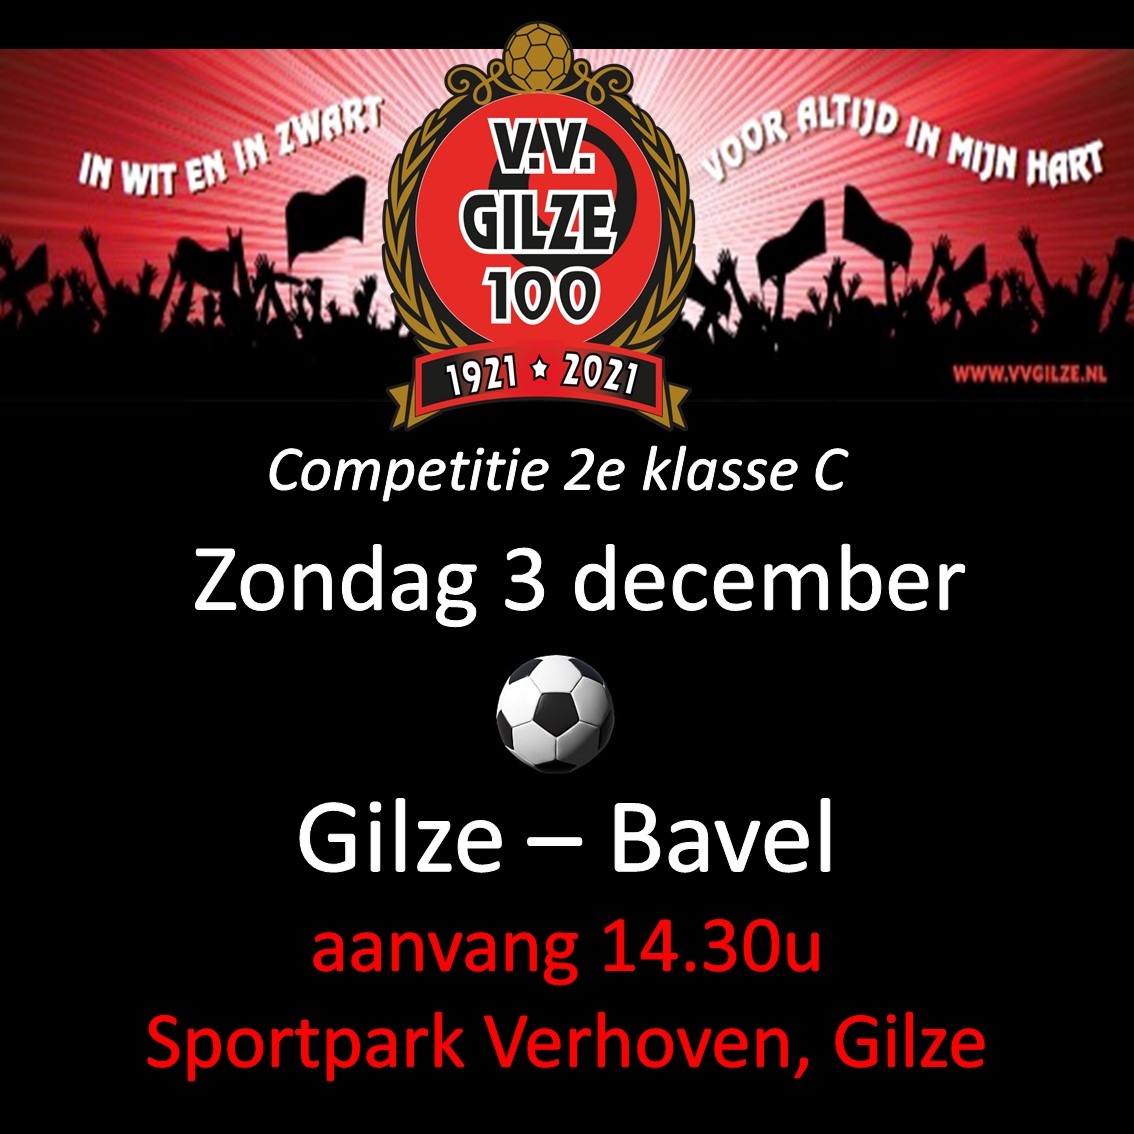 Zondag 3 december, SUPER SUNDAY: Gilze - Bavel